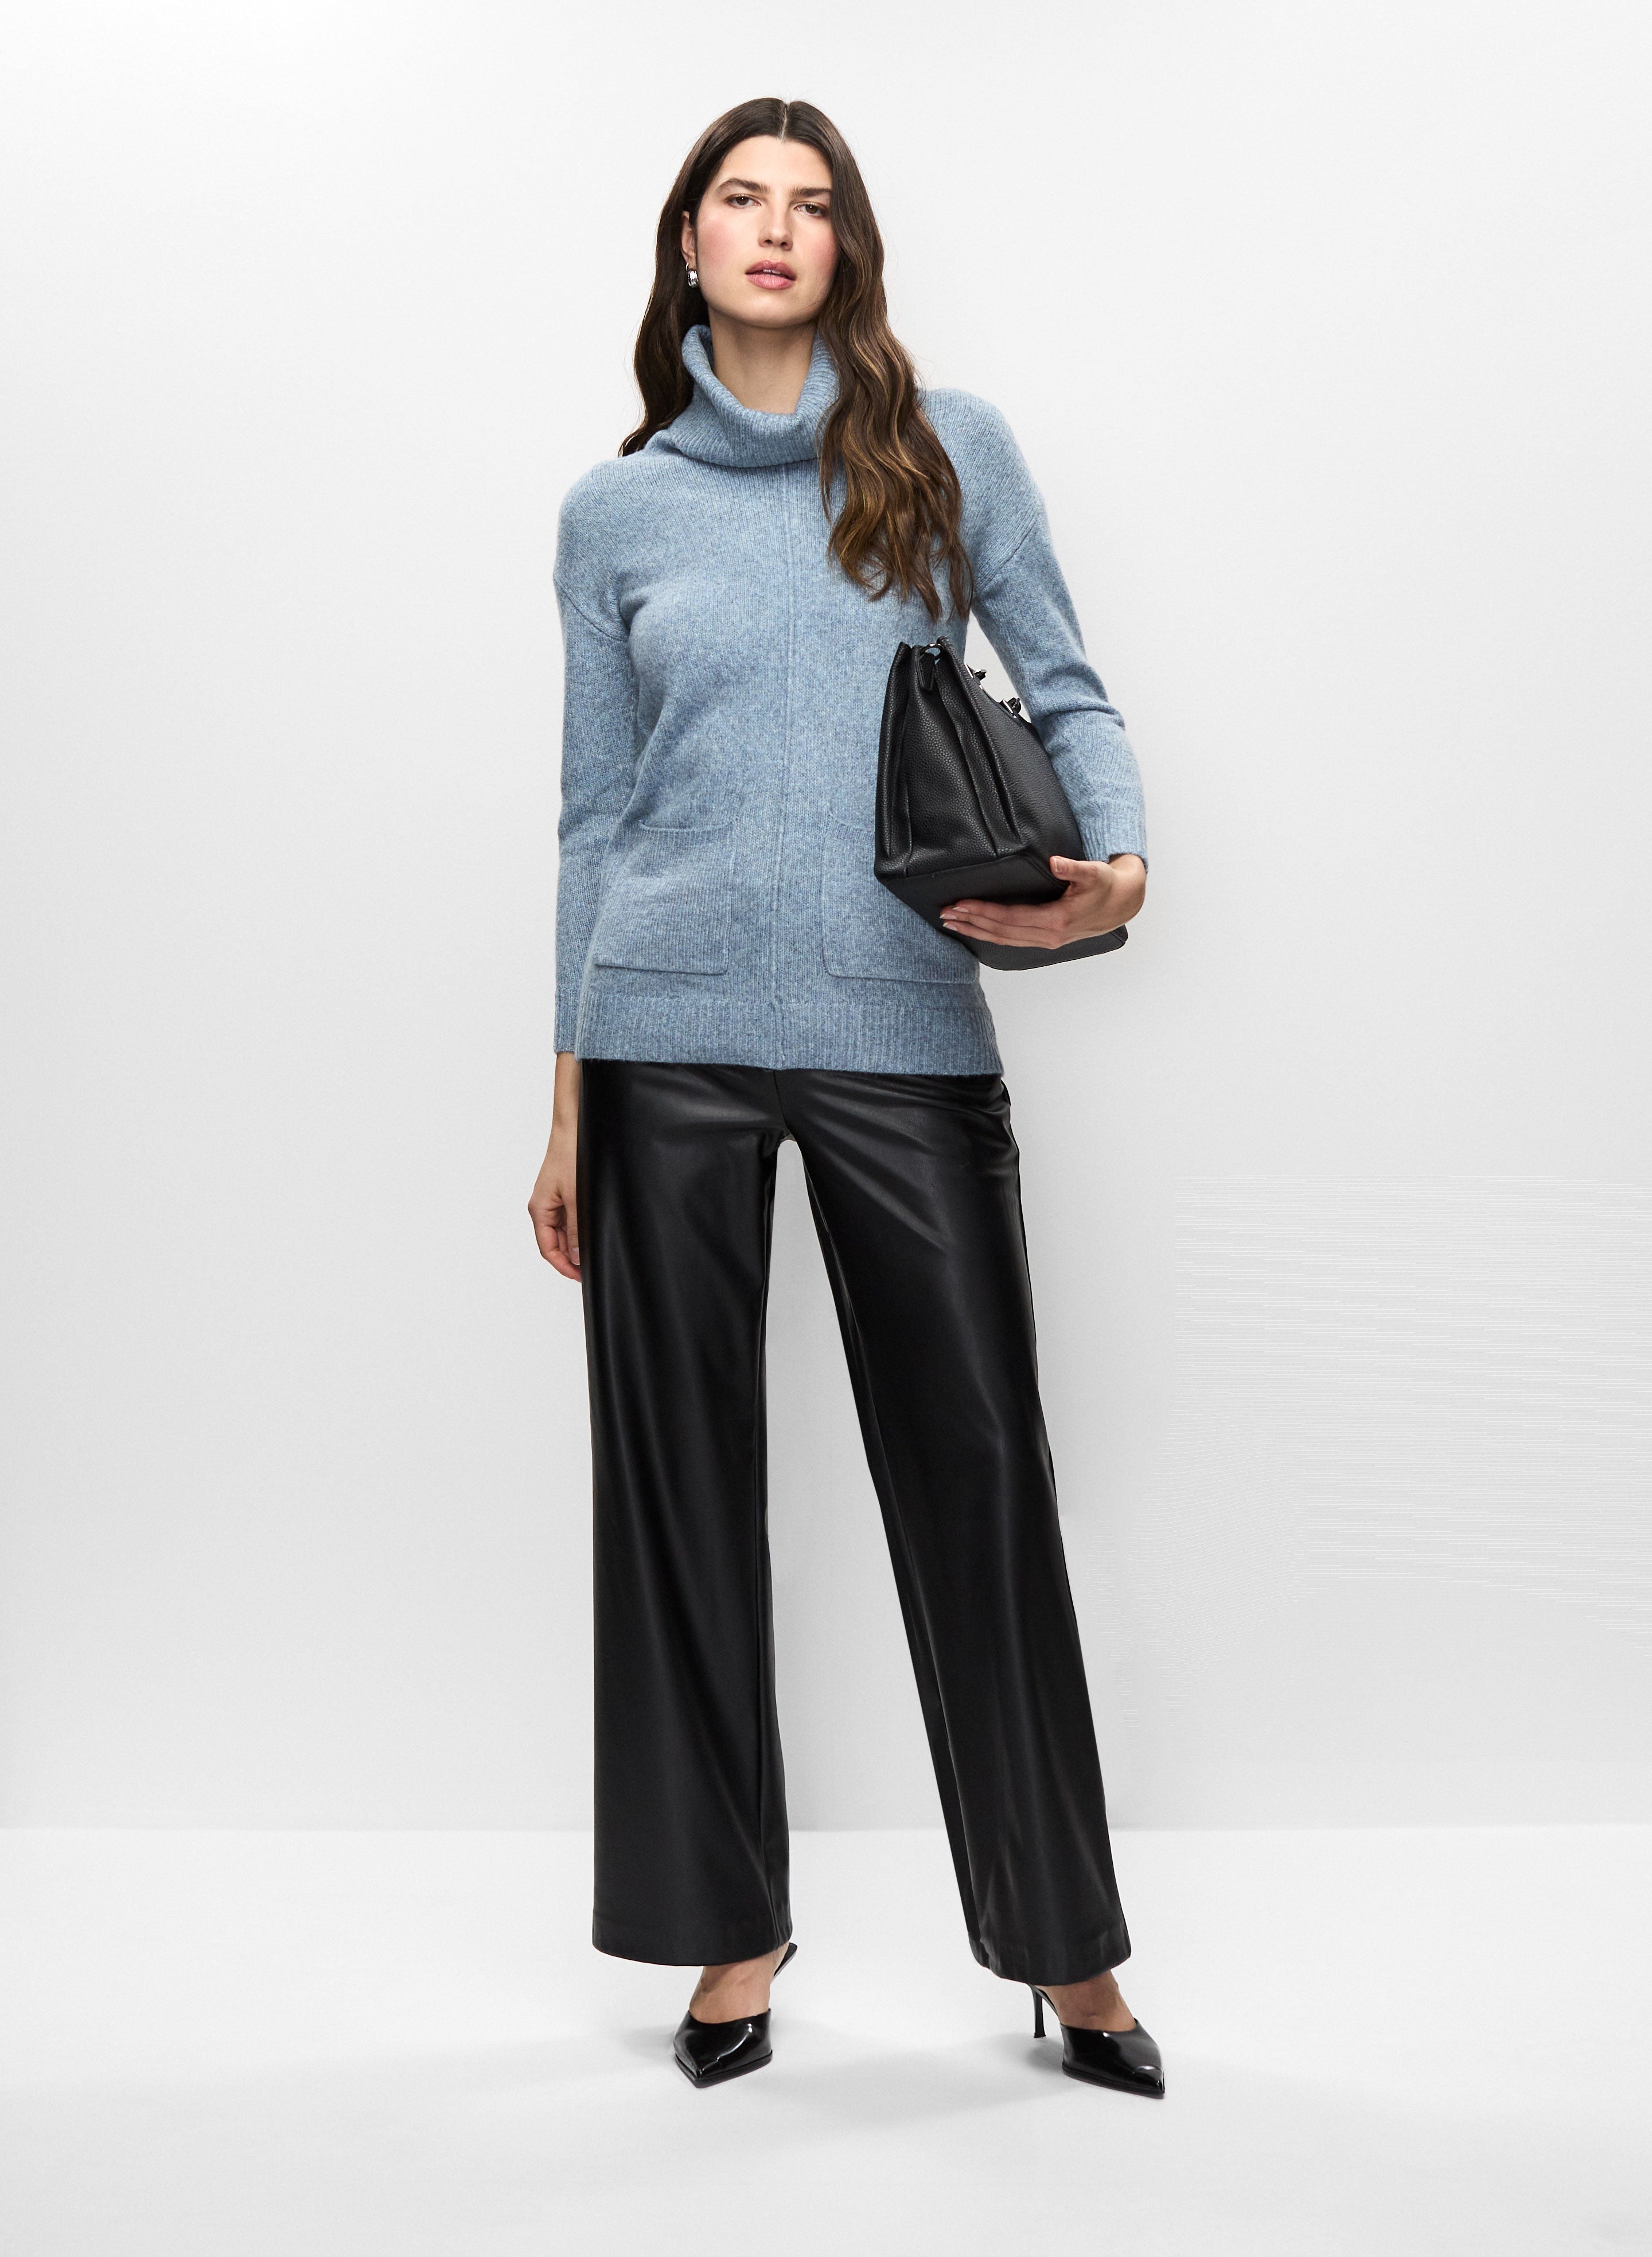 Cowl Neck Sweater & Vegan Leather Pants